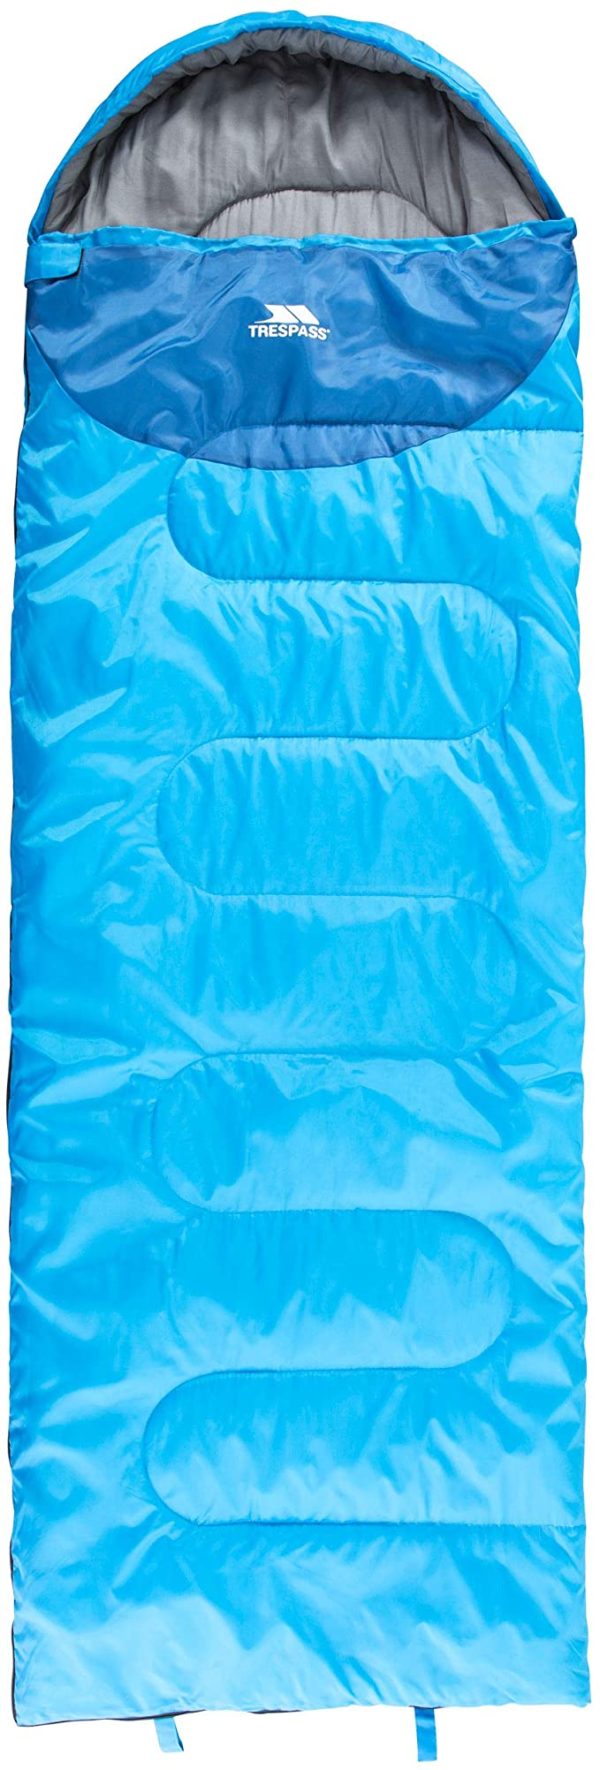 Snooze 2 Season Sleeping Bag - BLUE EACH big size 220cm